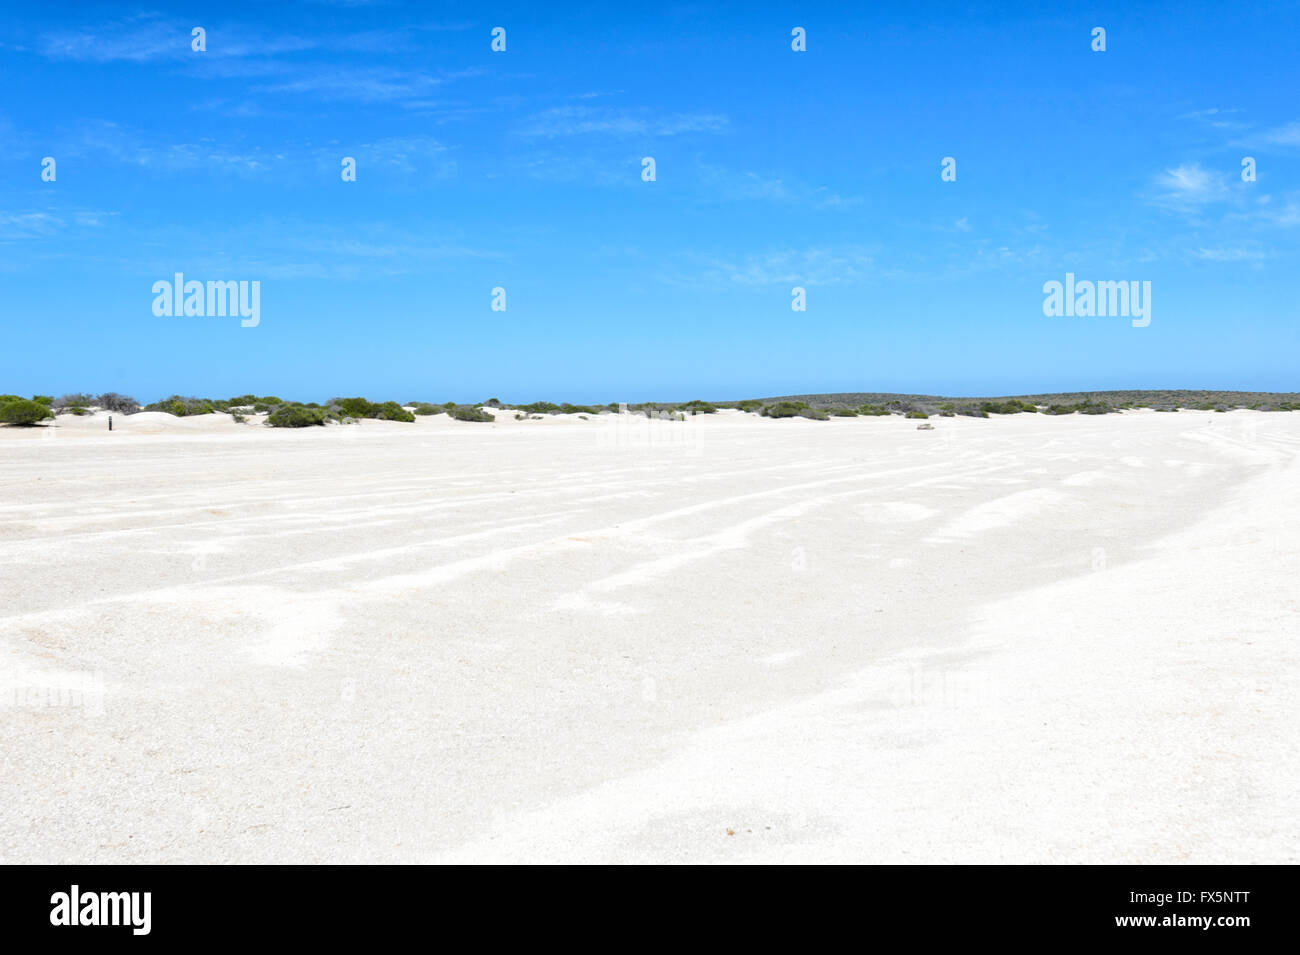 Shell Beach, Shark Bay, Western Australia, WA, has cockle shells (coquina) reaching a depth of 7 to 10 metres. Stock Photo